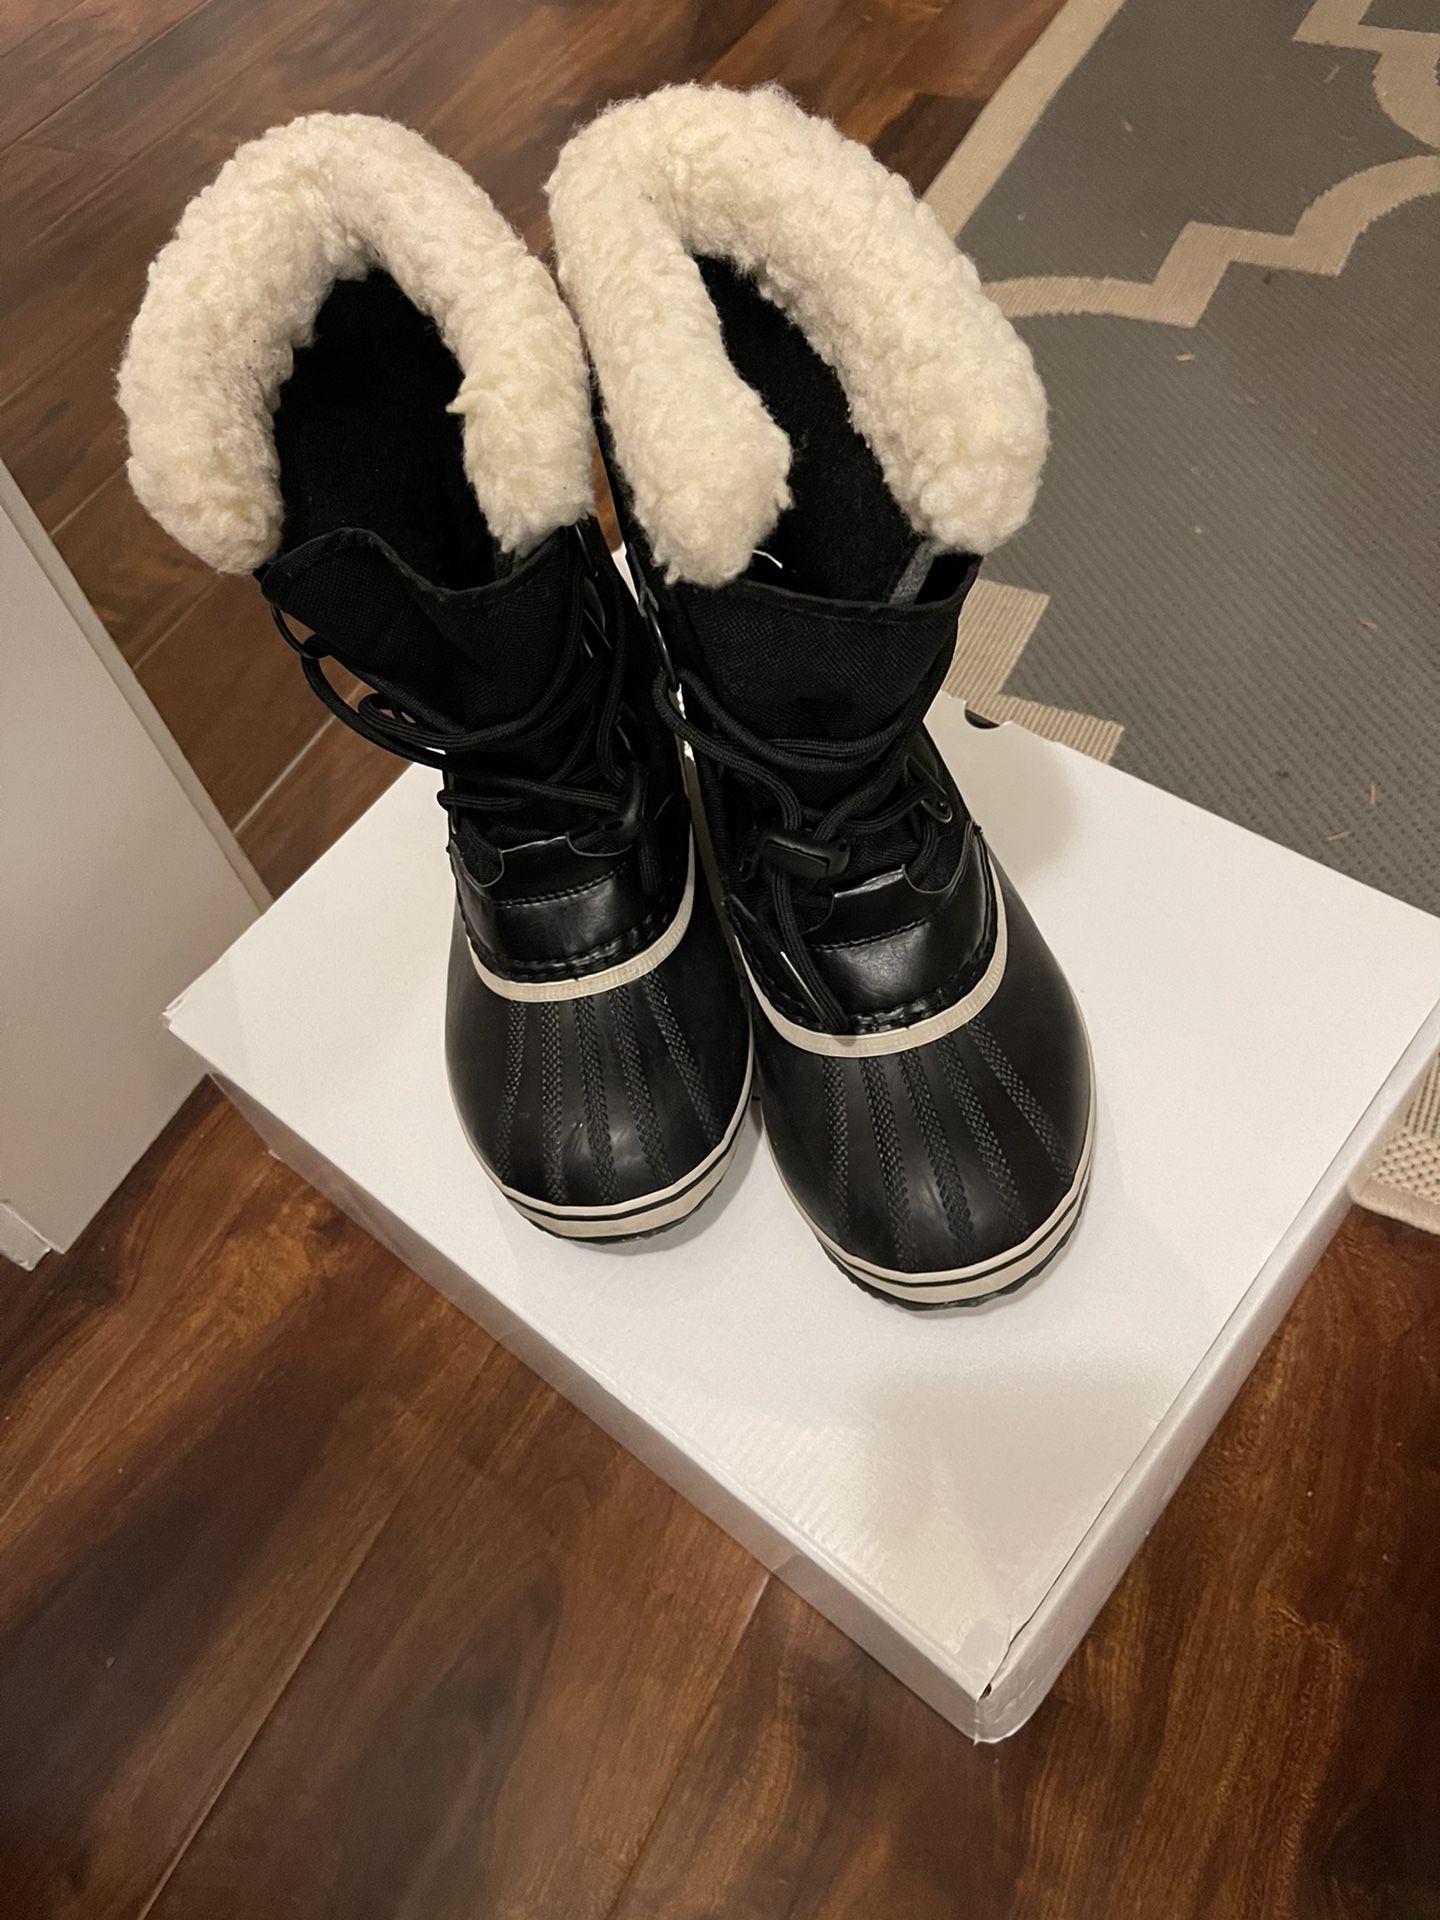 Sorel Snow Boots Size 4